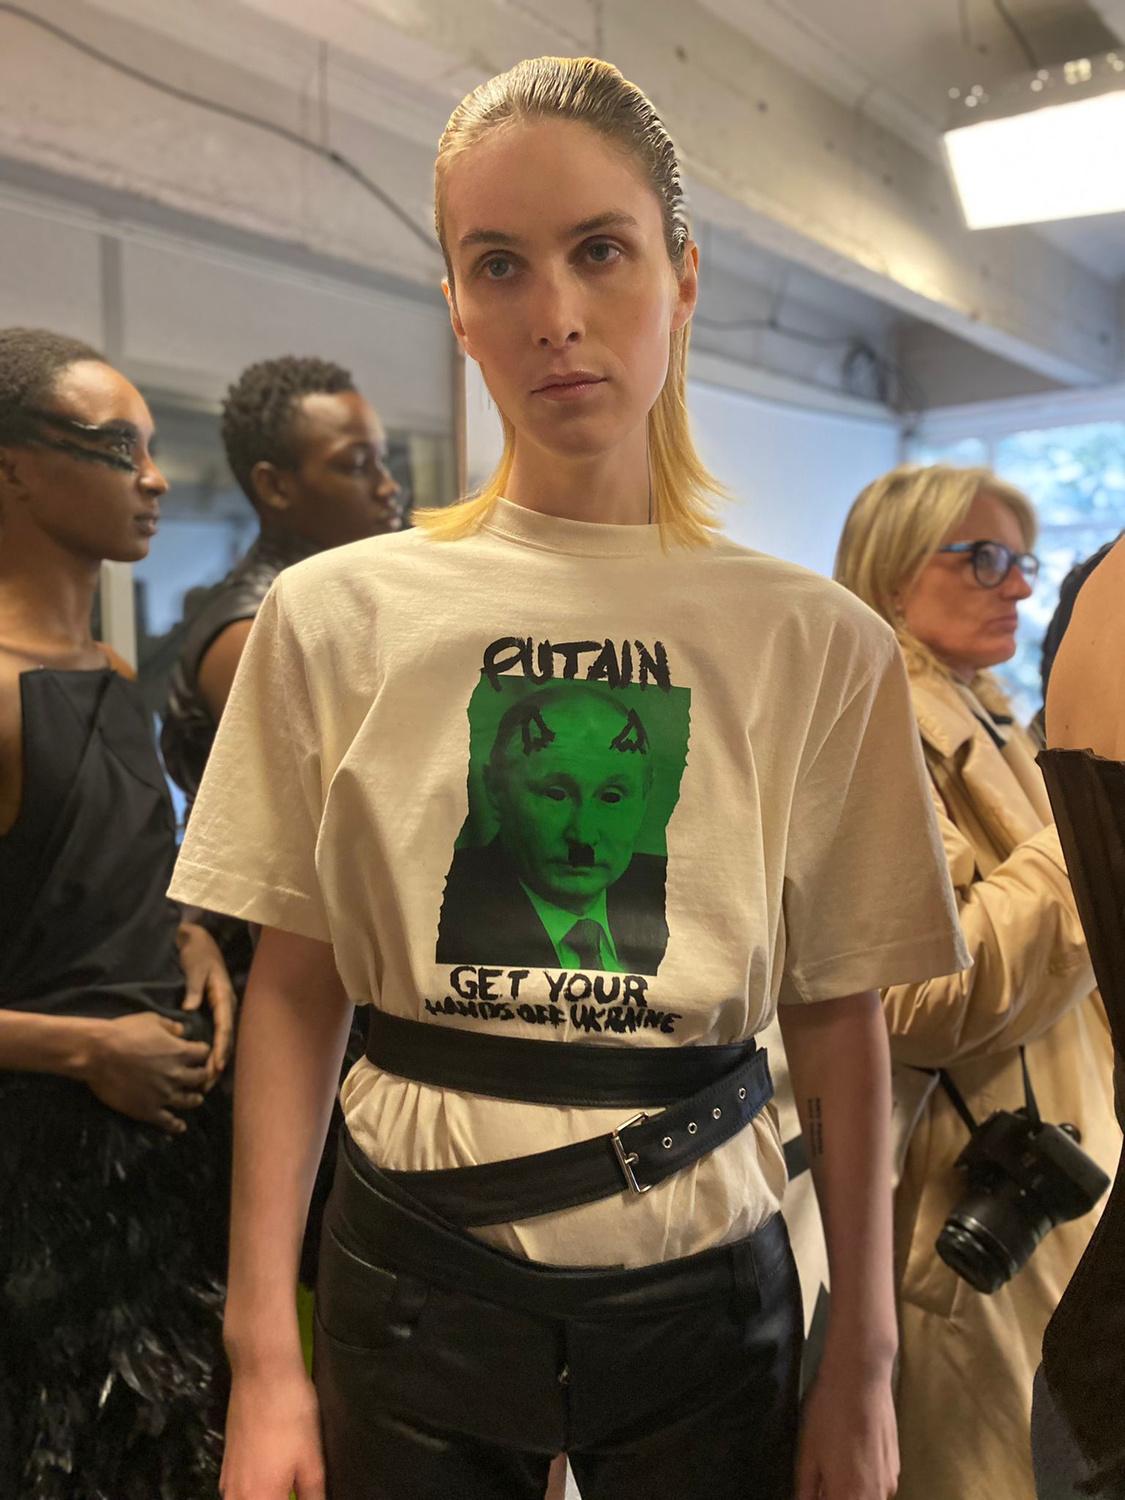 Het bewuste Poetin-shirt van Ninamounia